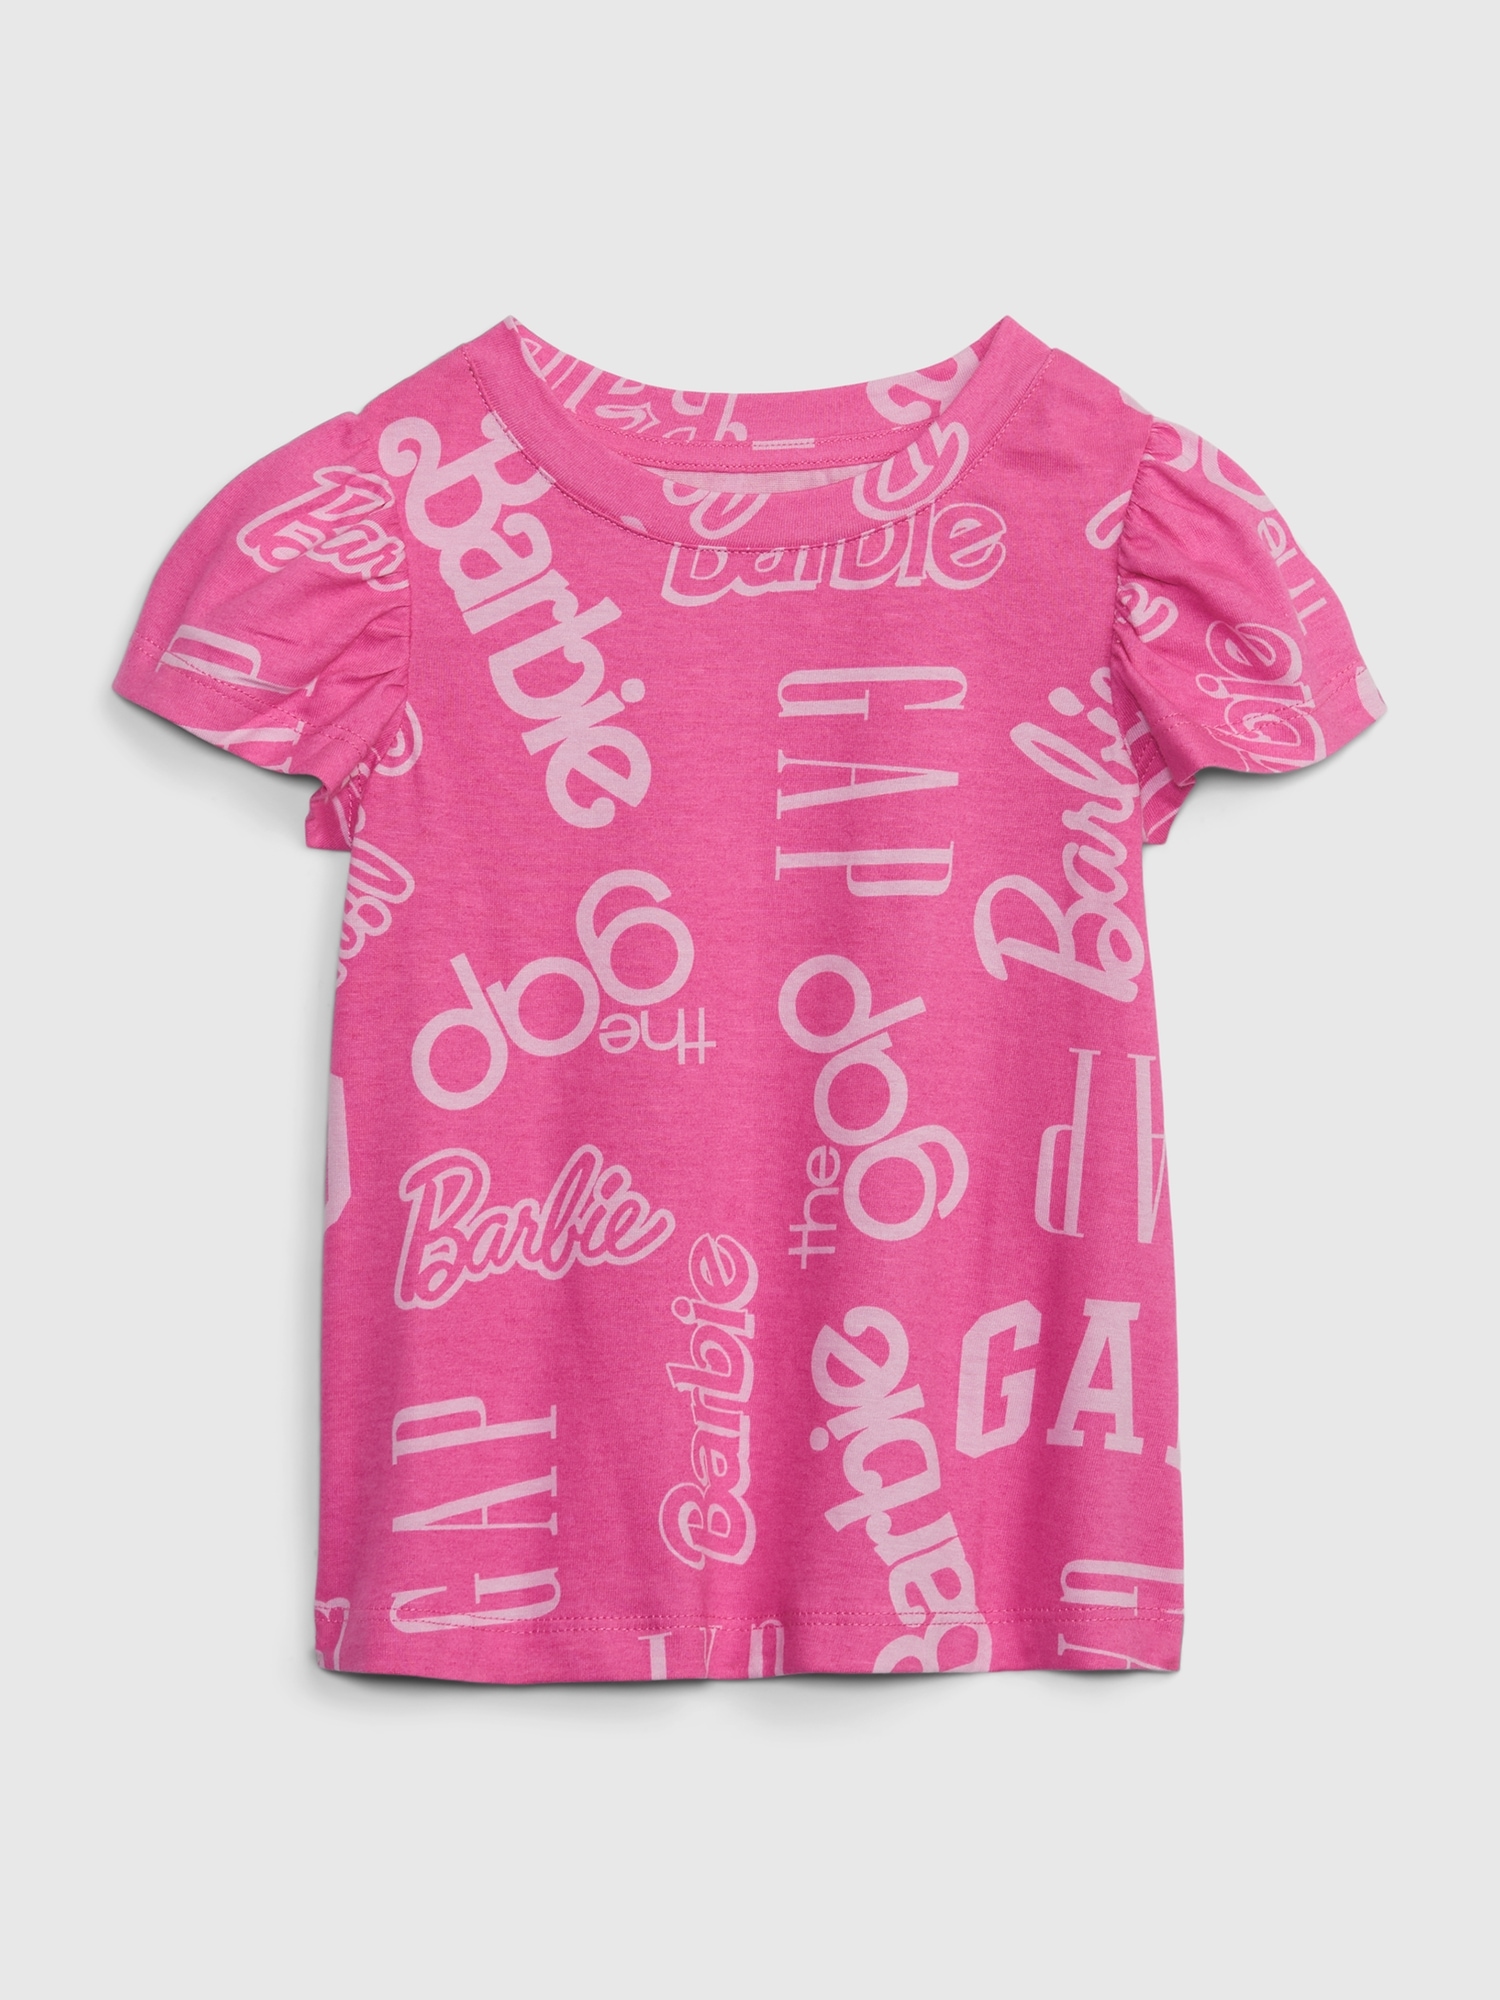  Barbie Toddler Girls T-Shirt and Pants Pink/Black 2T